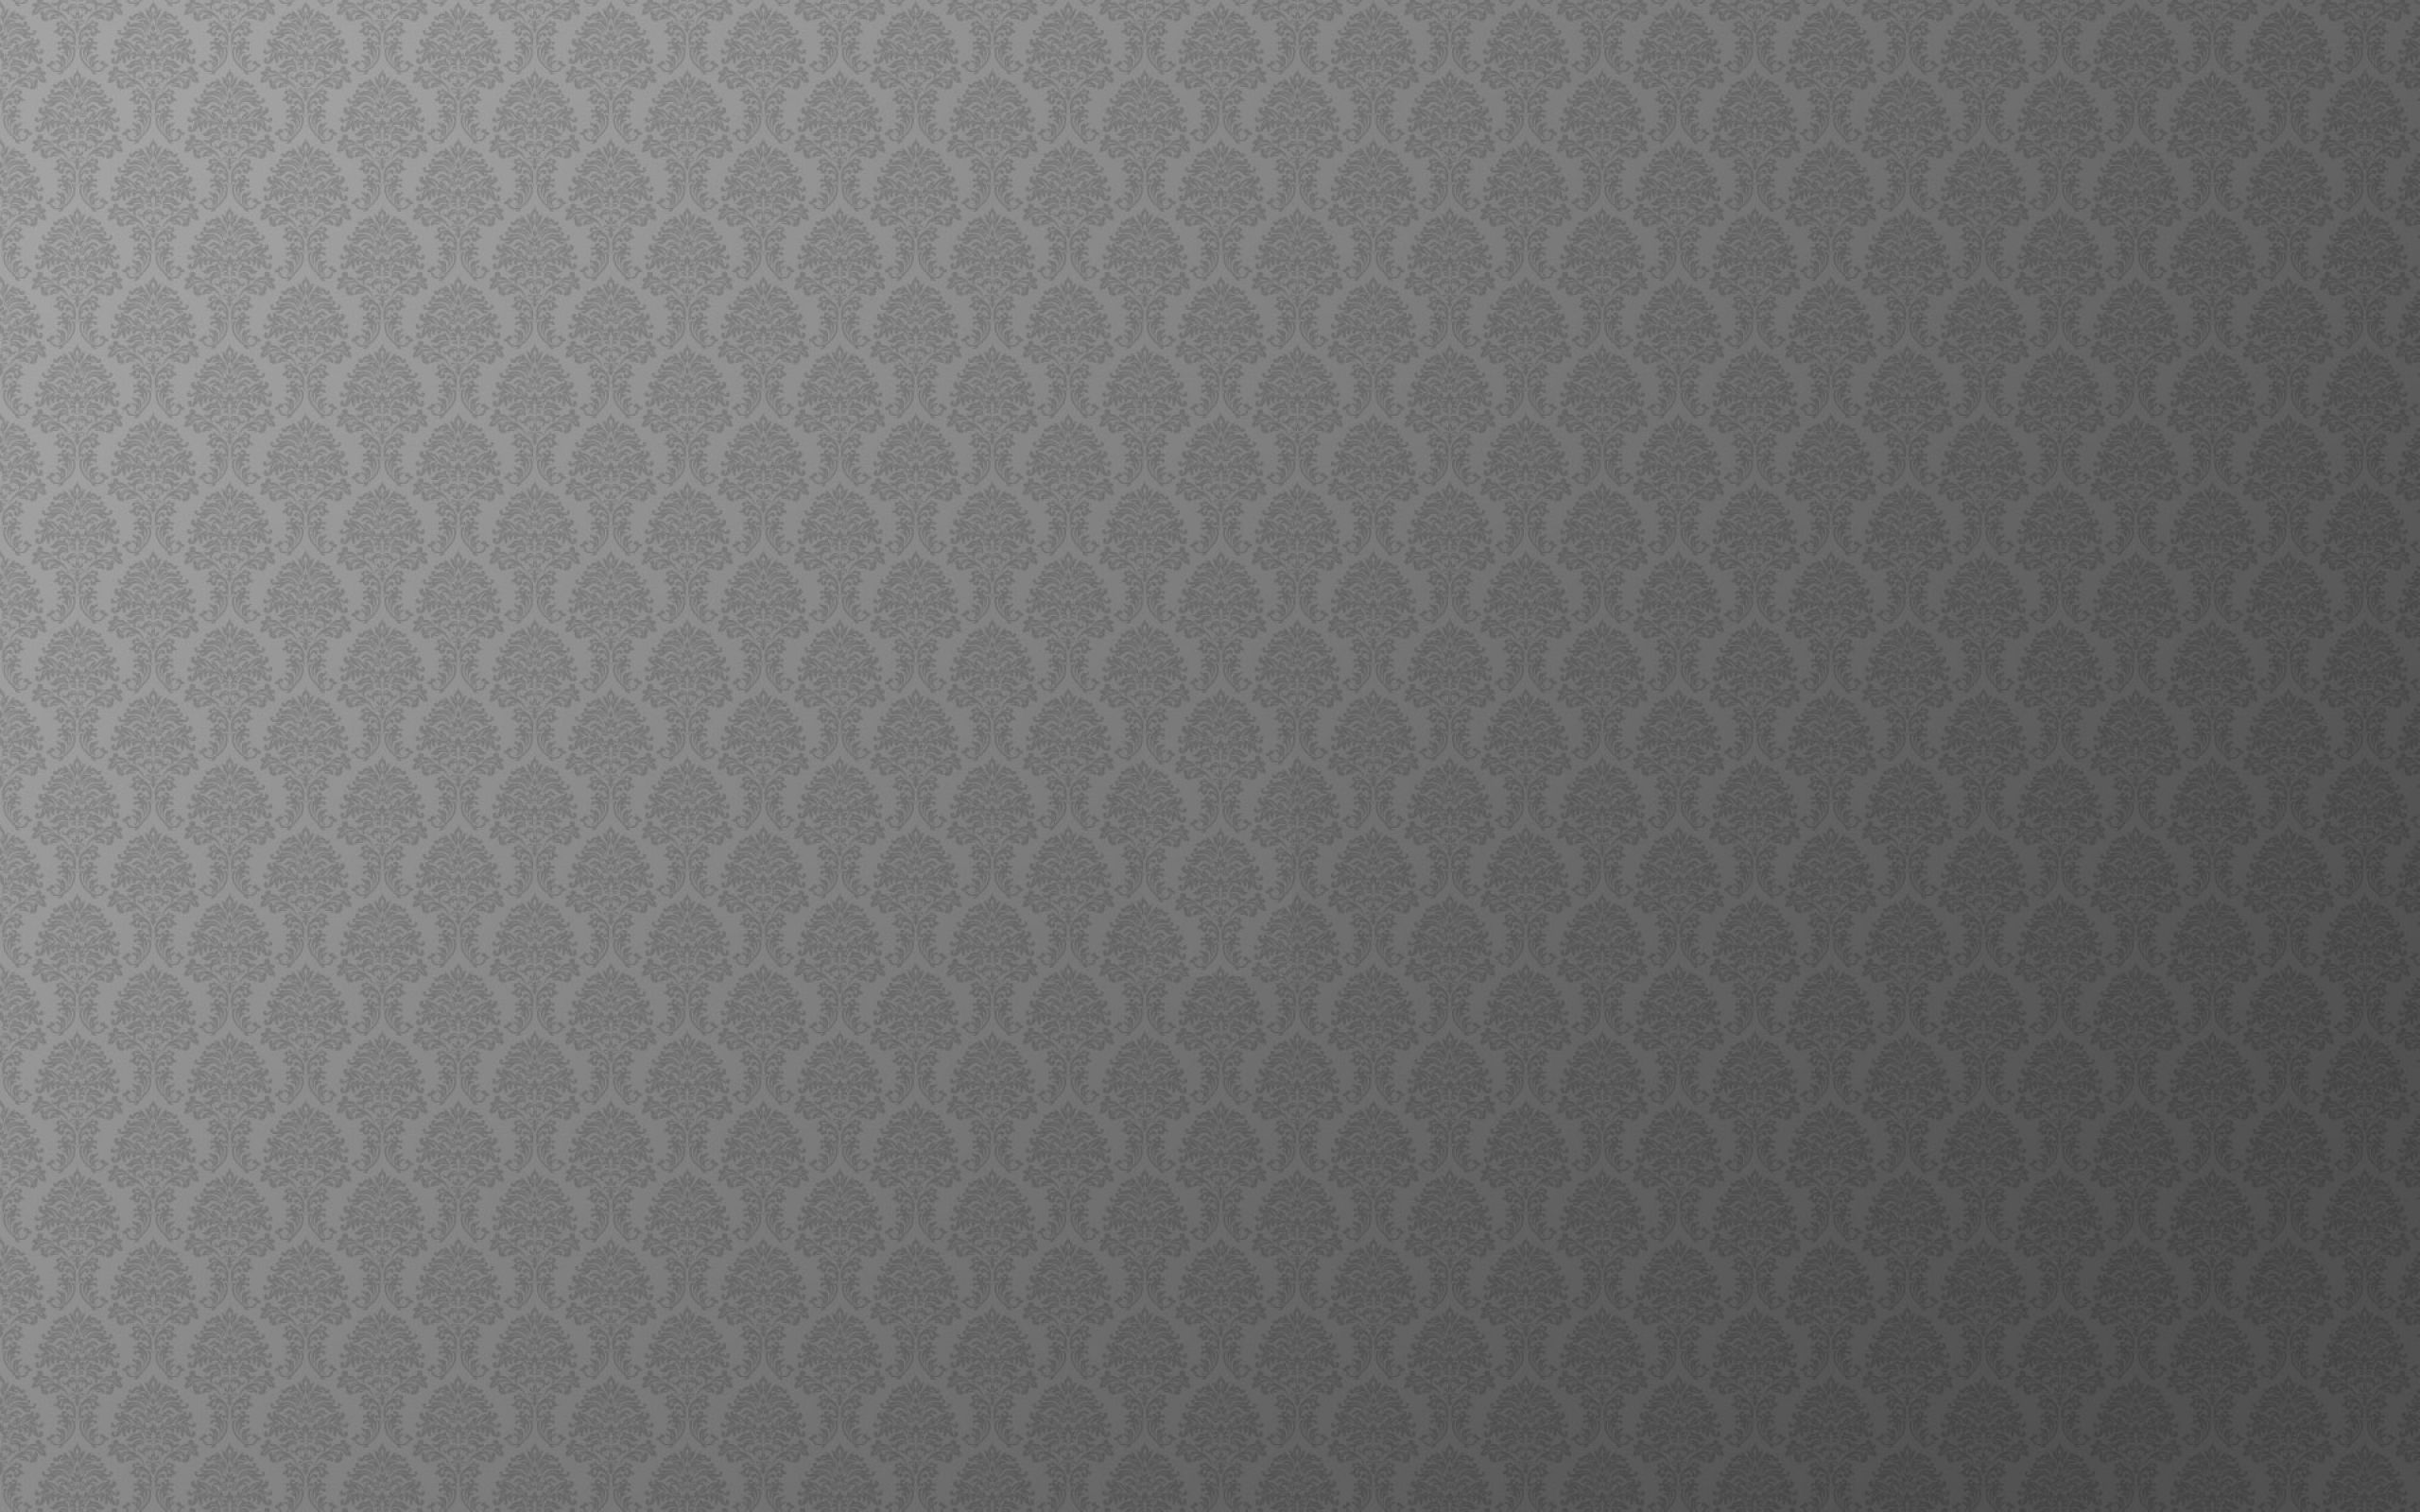 2560x1600 Grey Wallpaper Hd